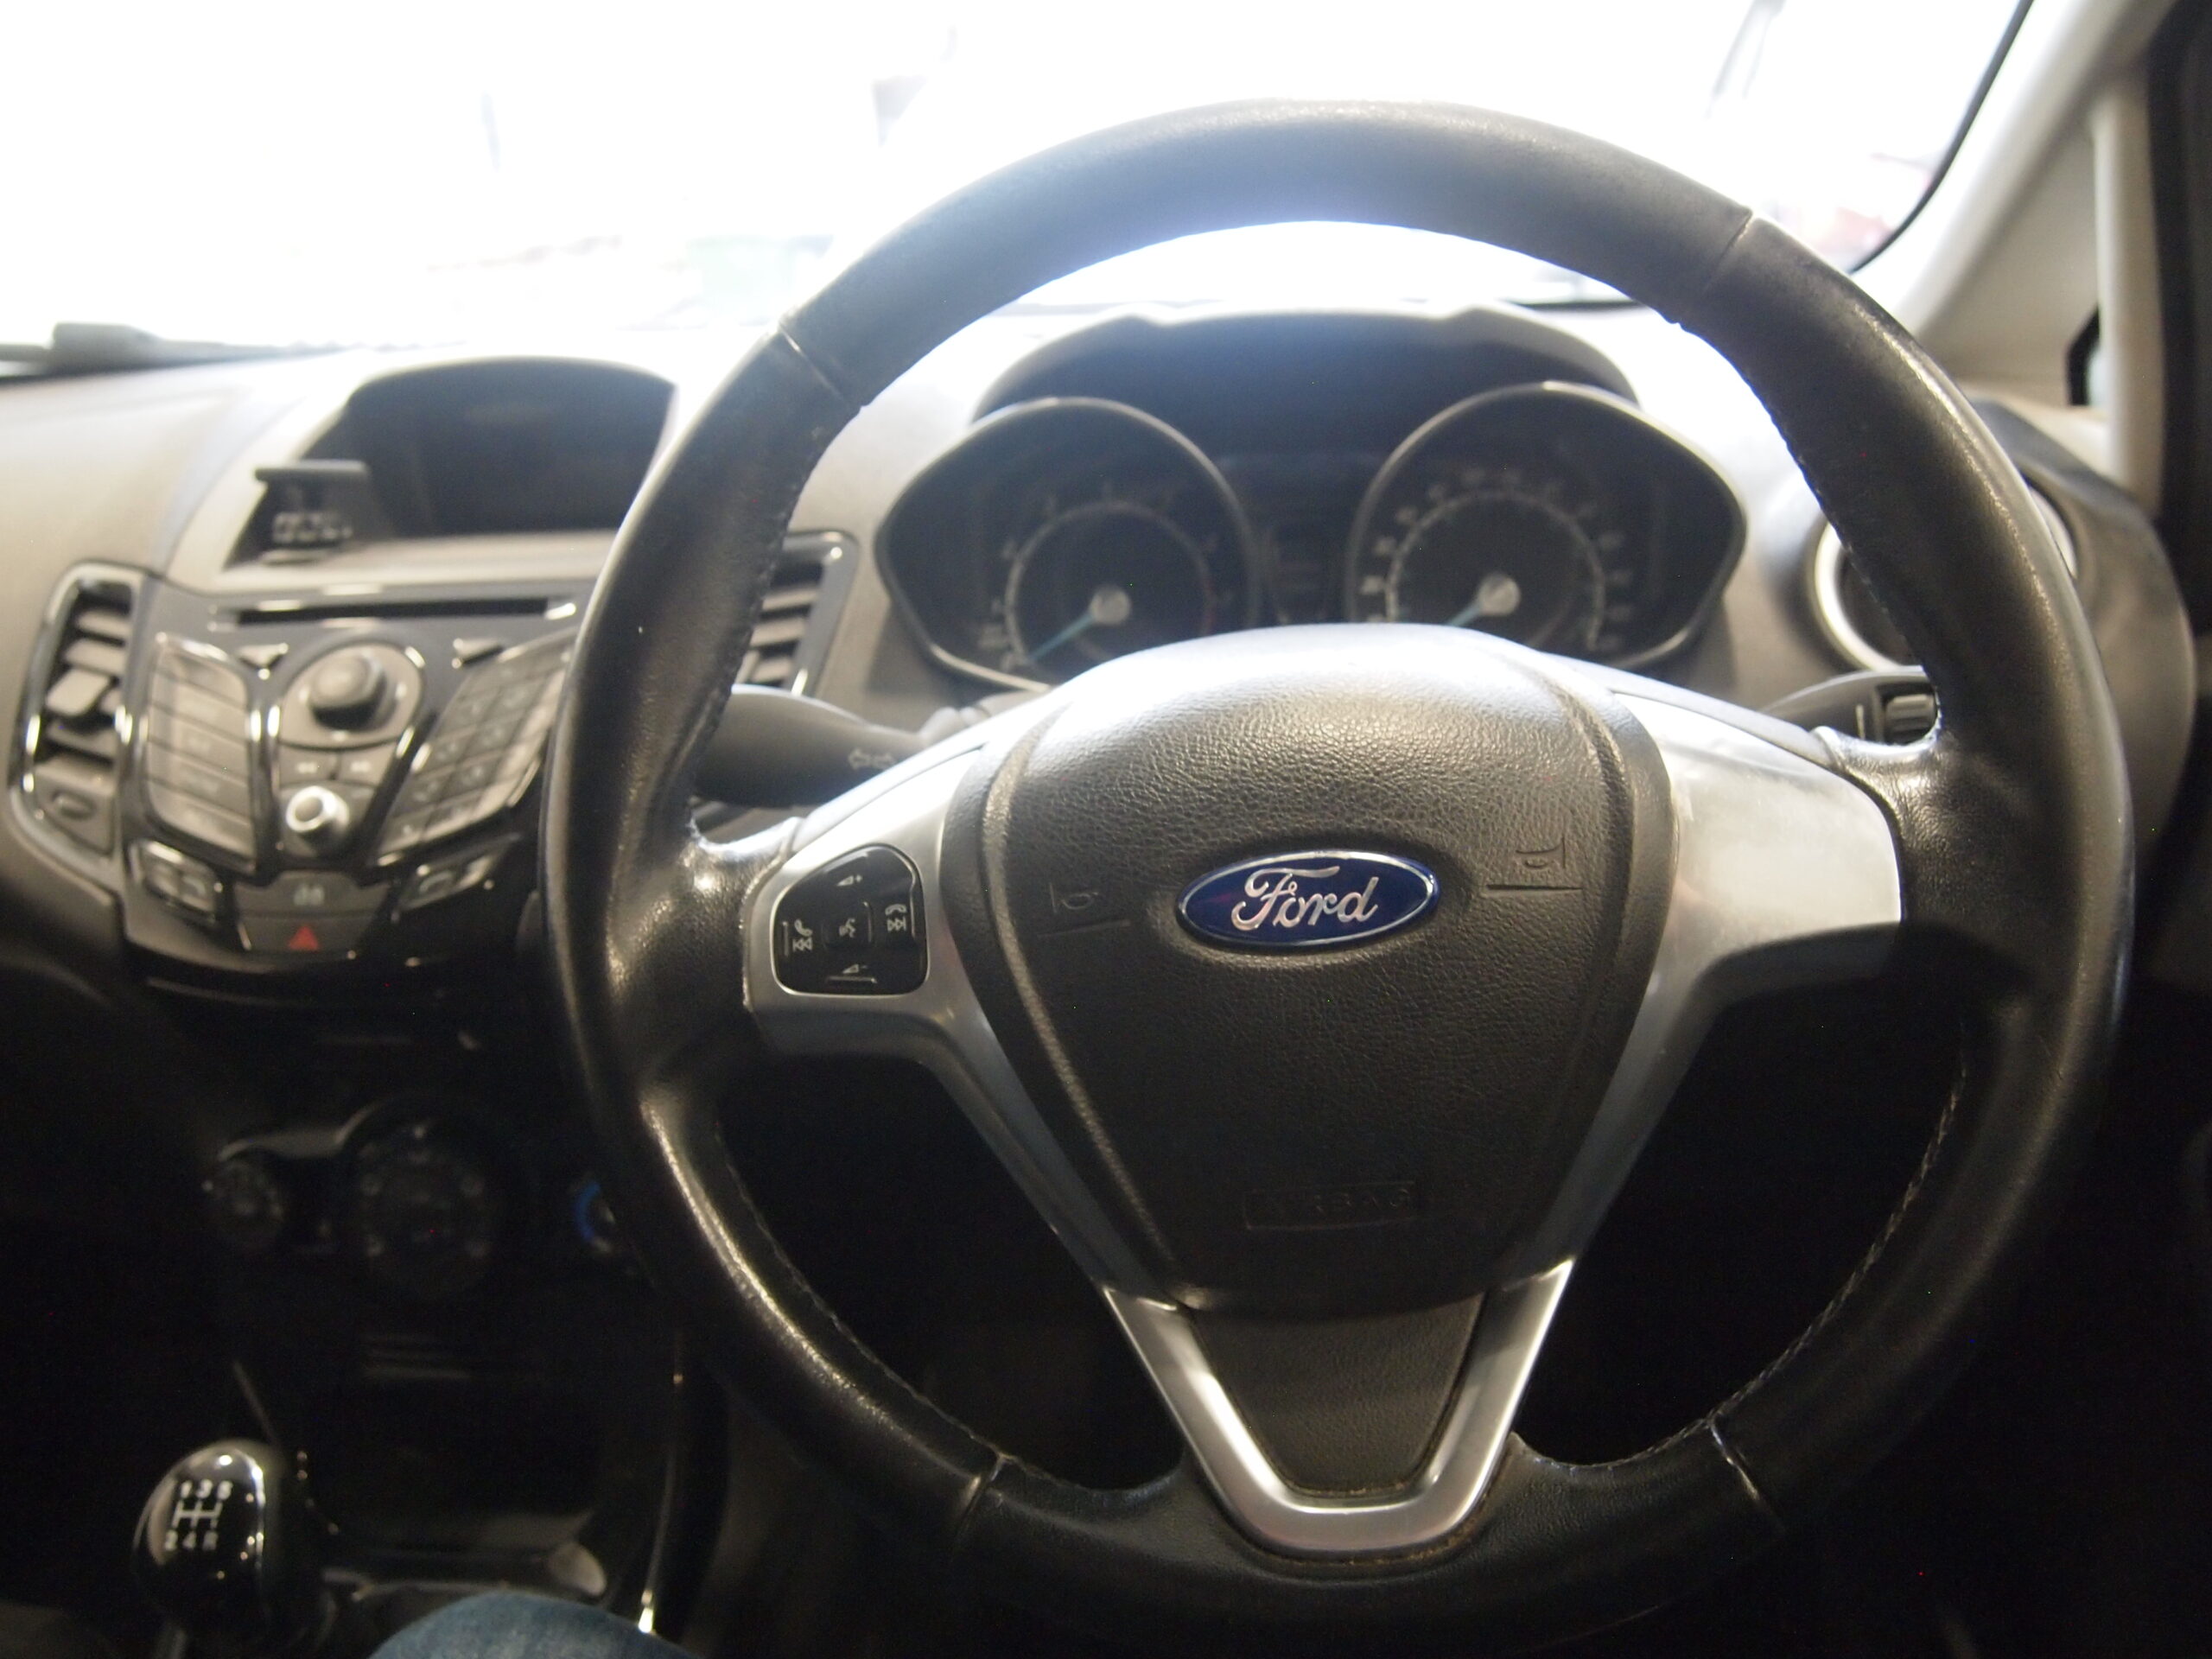 Ford Fiesta Zetec 2013 Manual